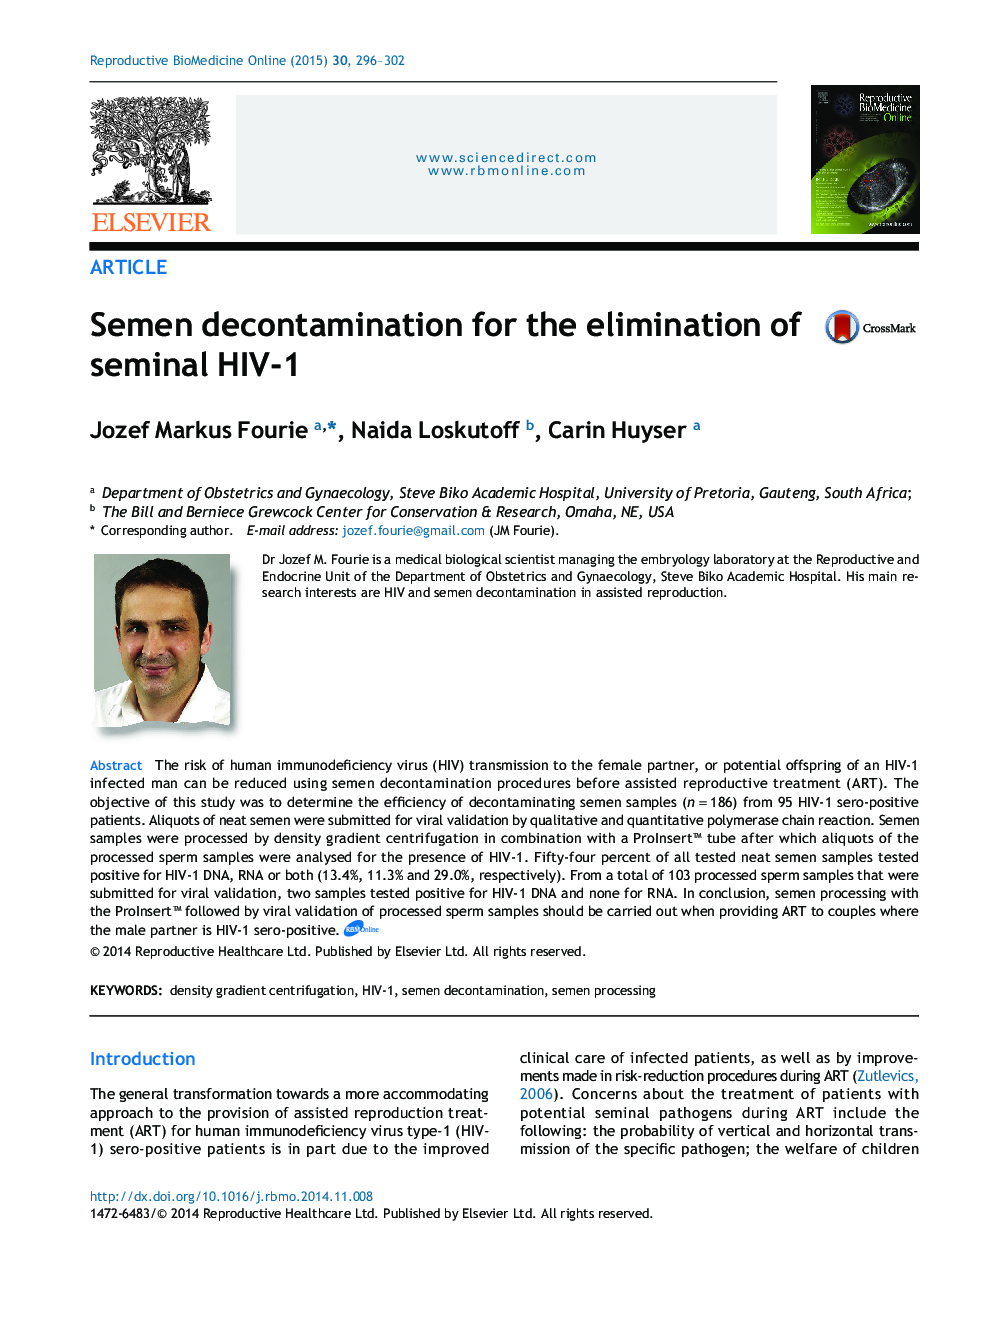 Semen decontamination for the elimination of seminal HIV-1